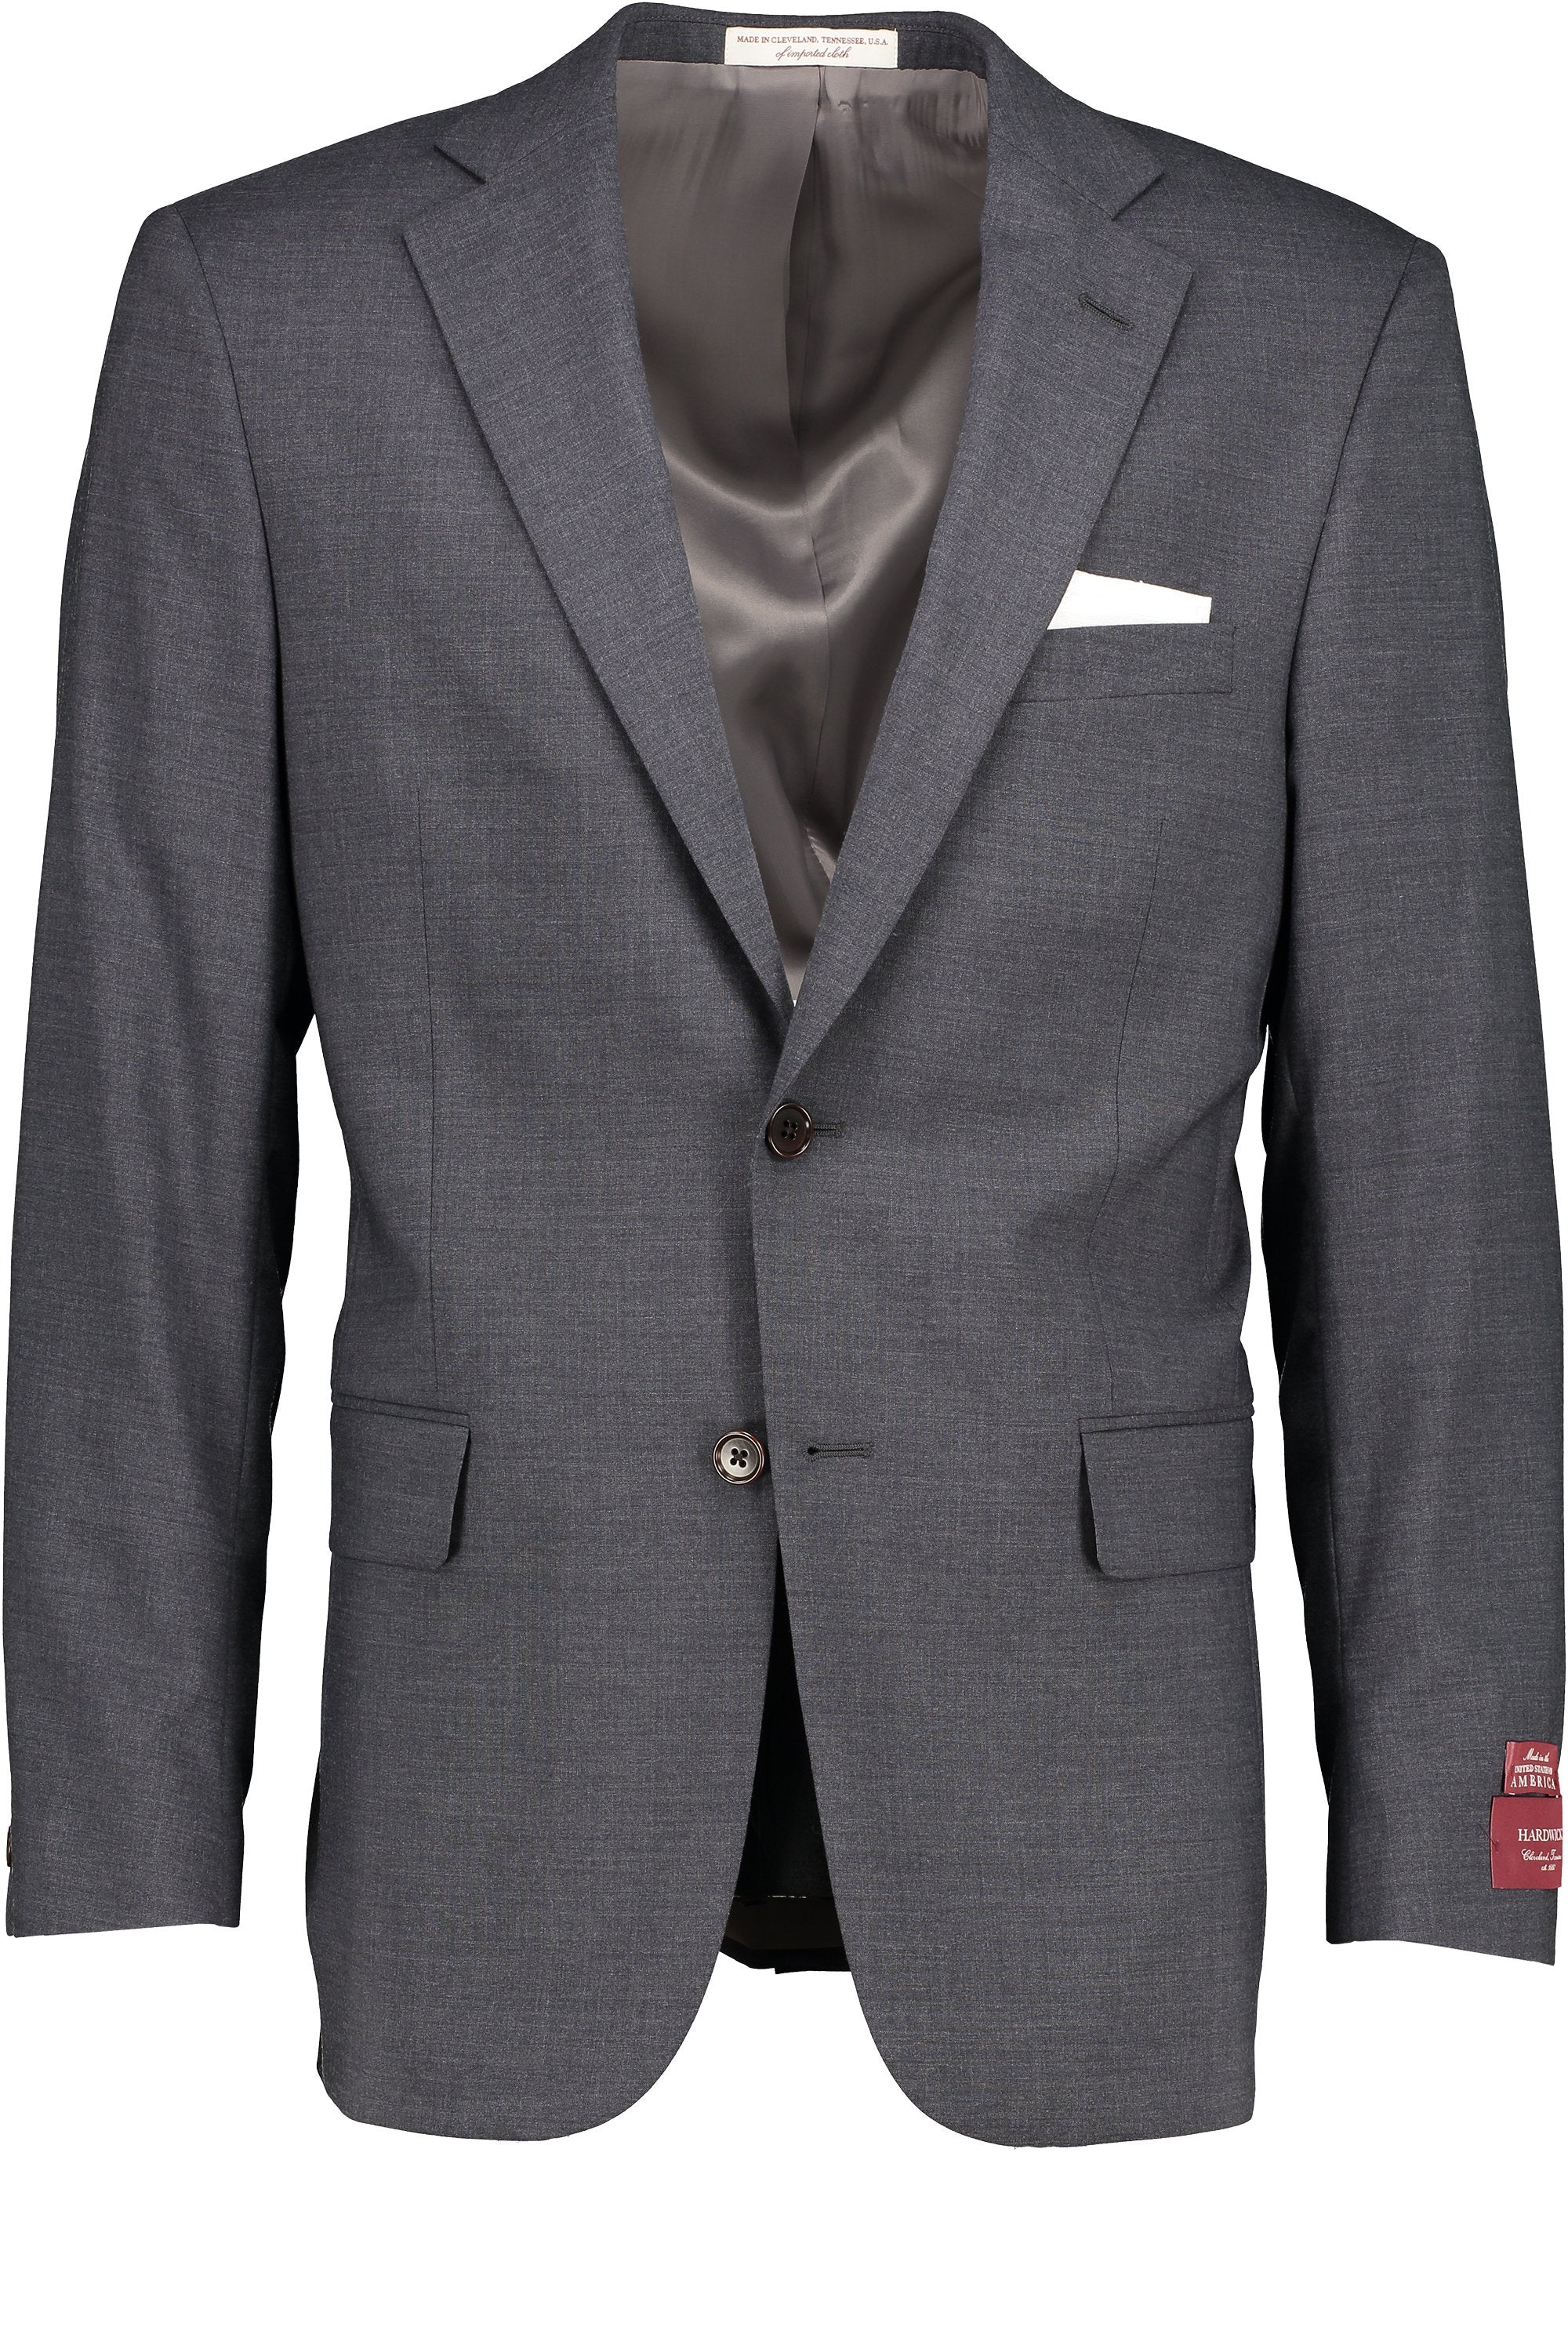 Men's Suit Separate - Coat Portly Cut MED GREY 98/2 WOOL/LYCRA SUPER100